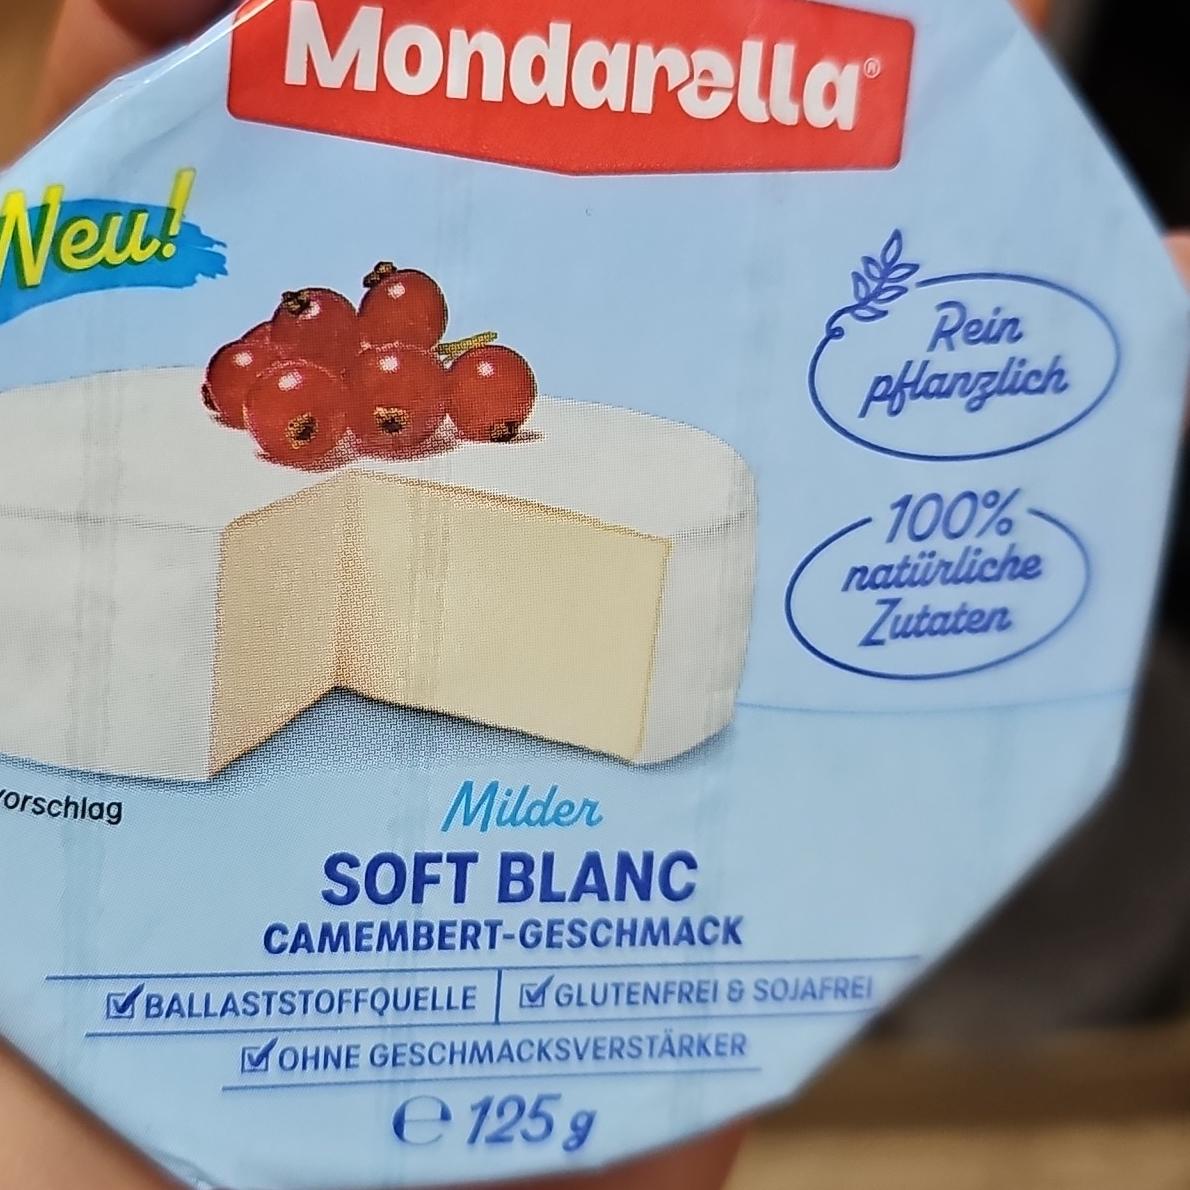 Fotografie - Milder Soft Blanc Camembert-Geschmack Mondarella